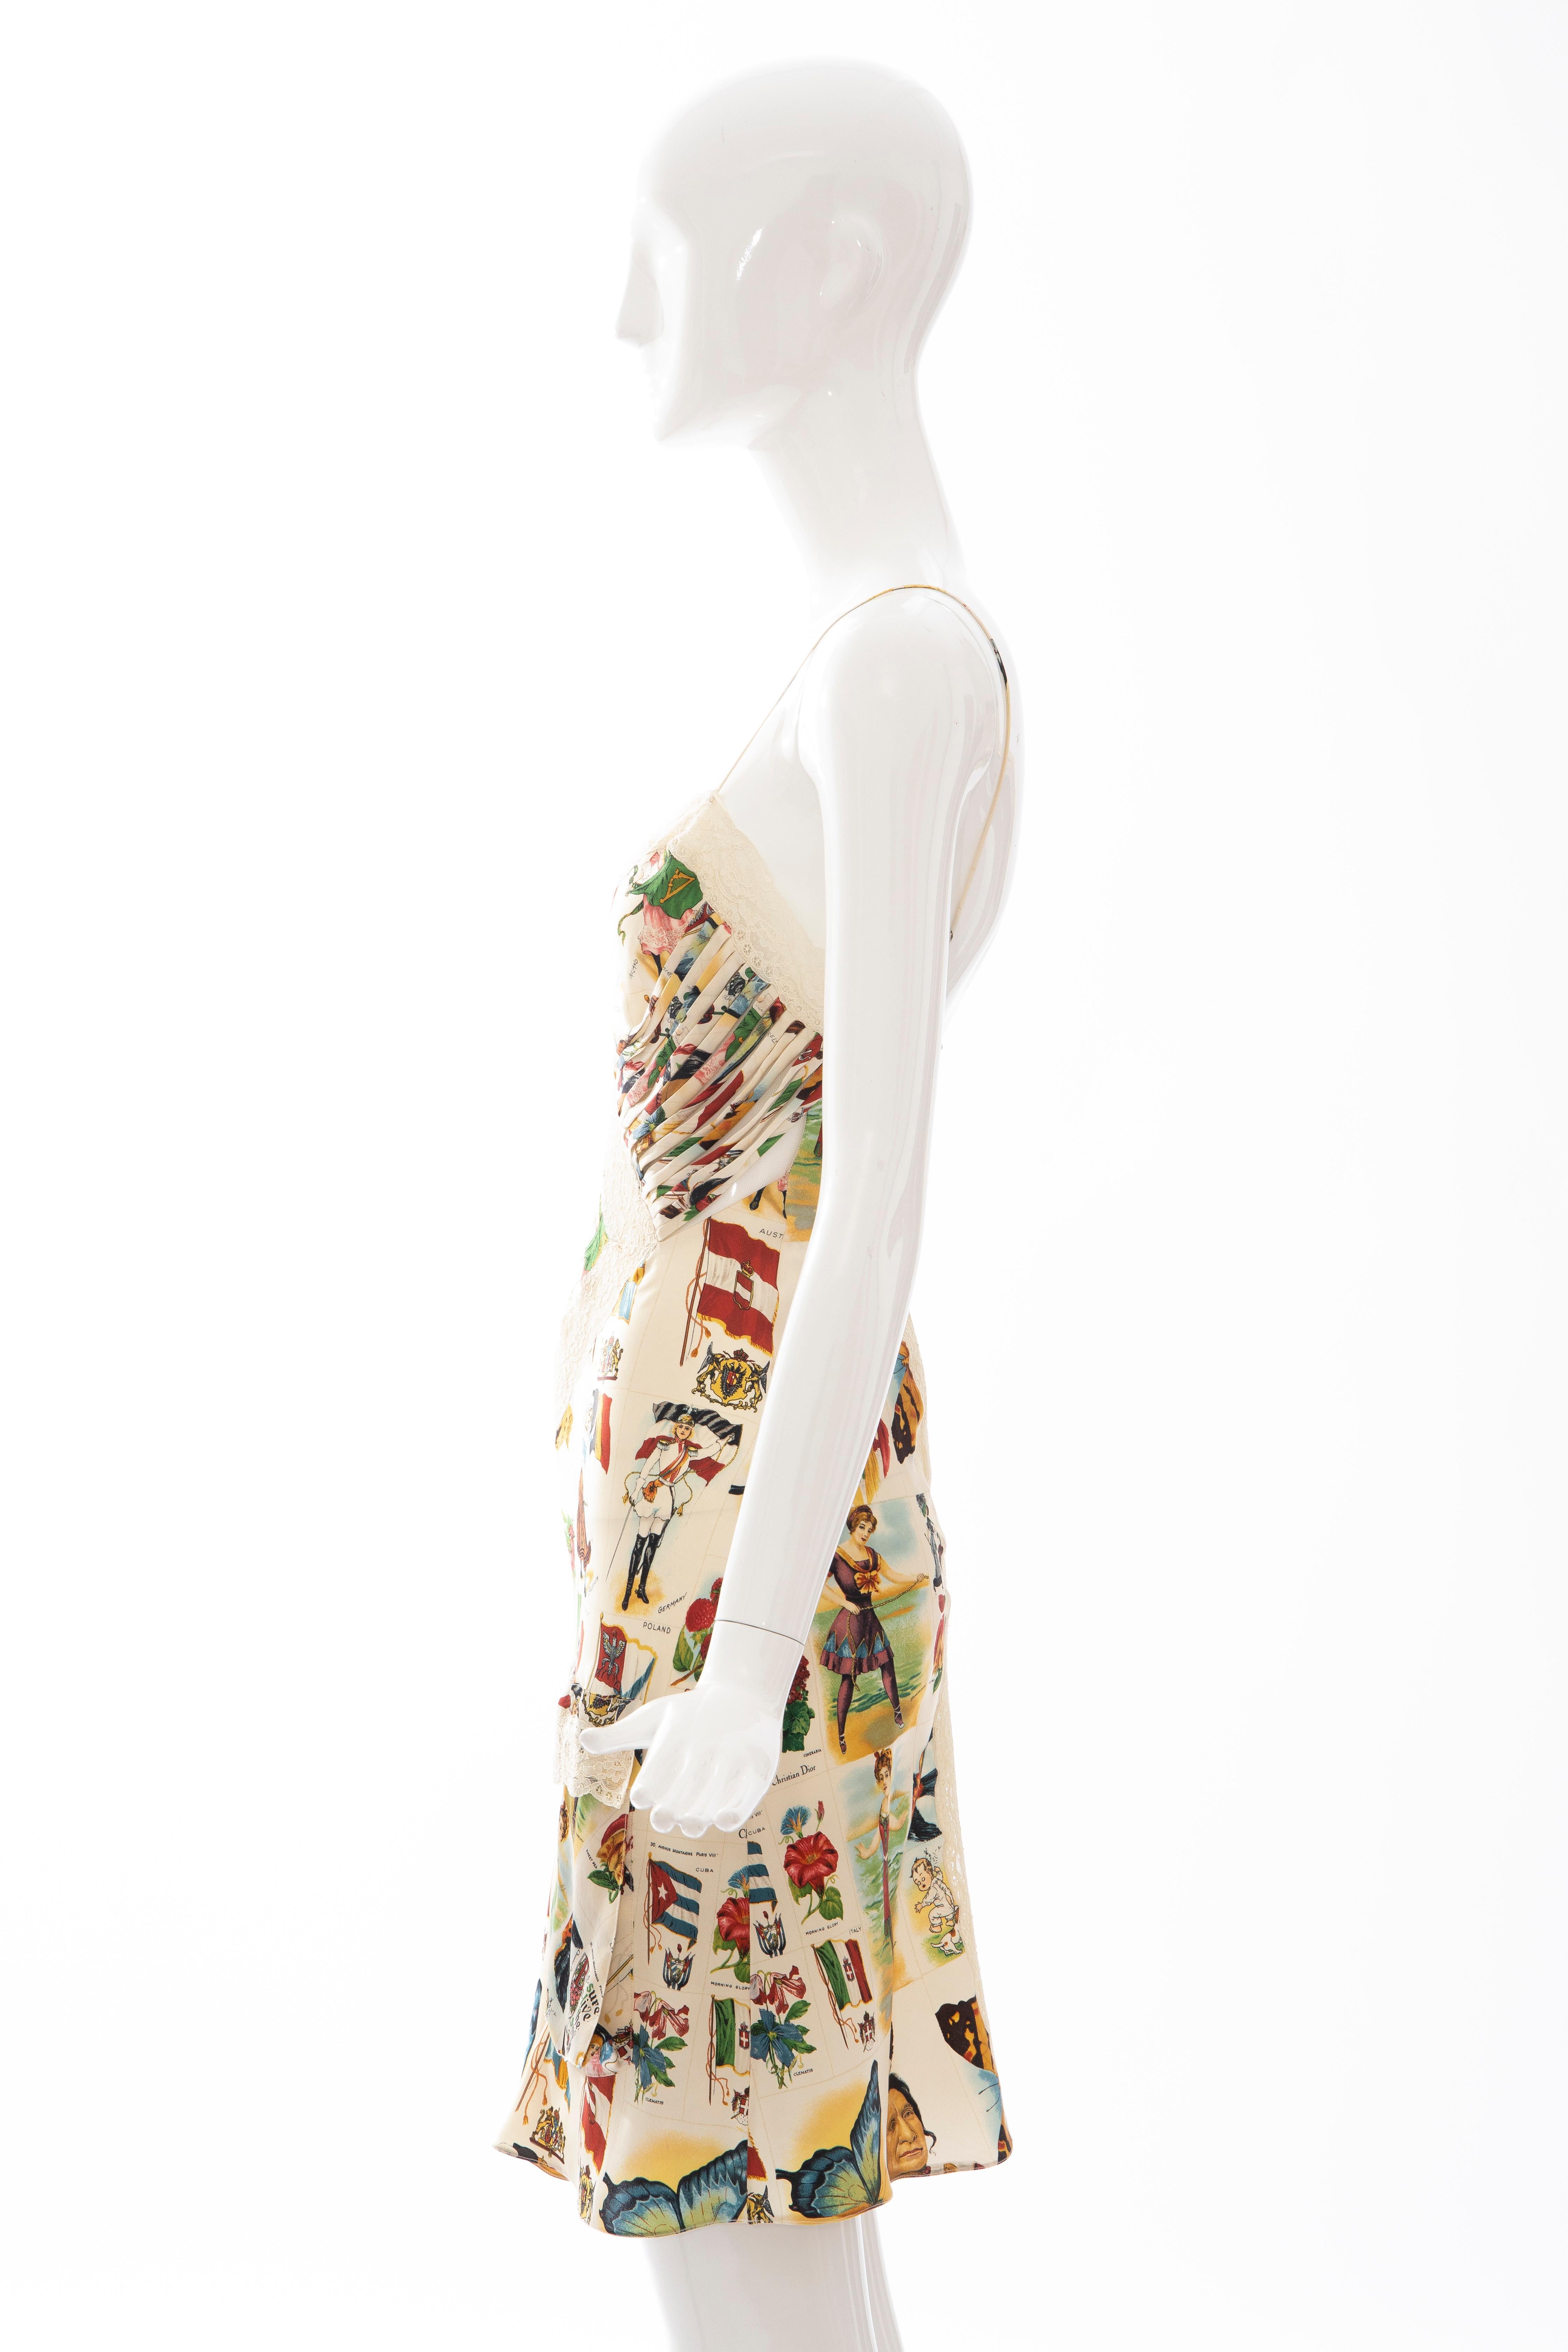 John Galliano for Christian Dior Runway Printed Silk & Lace Dress, Spring 2002 5